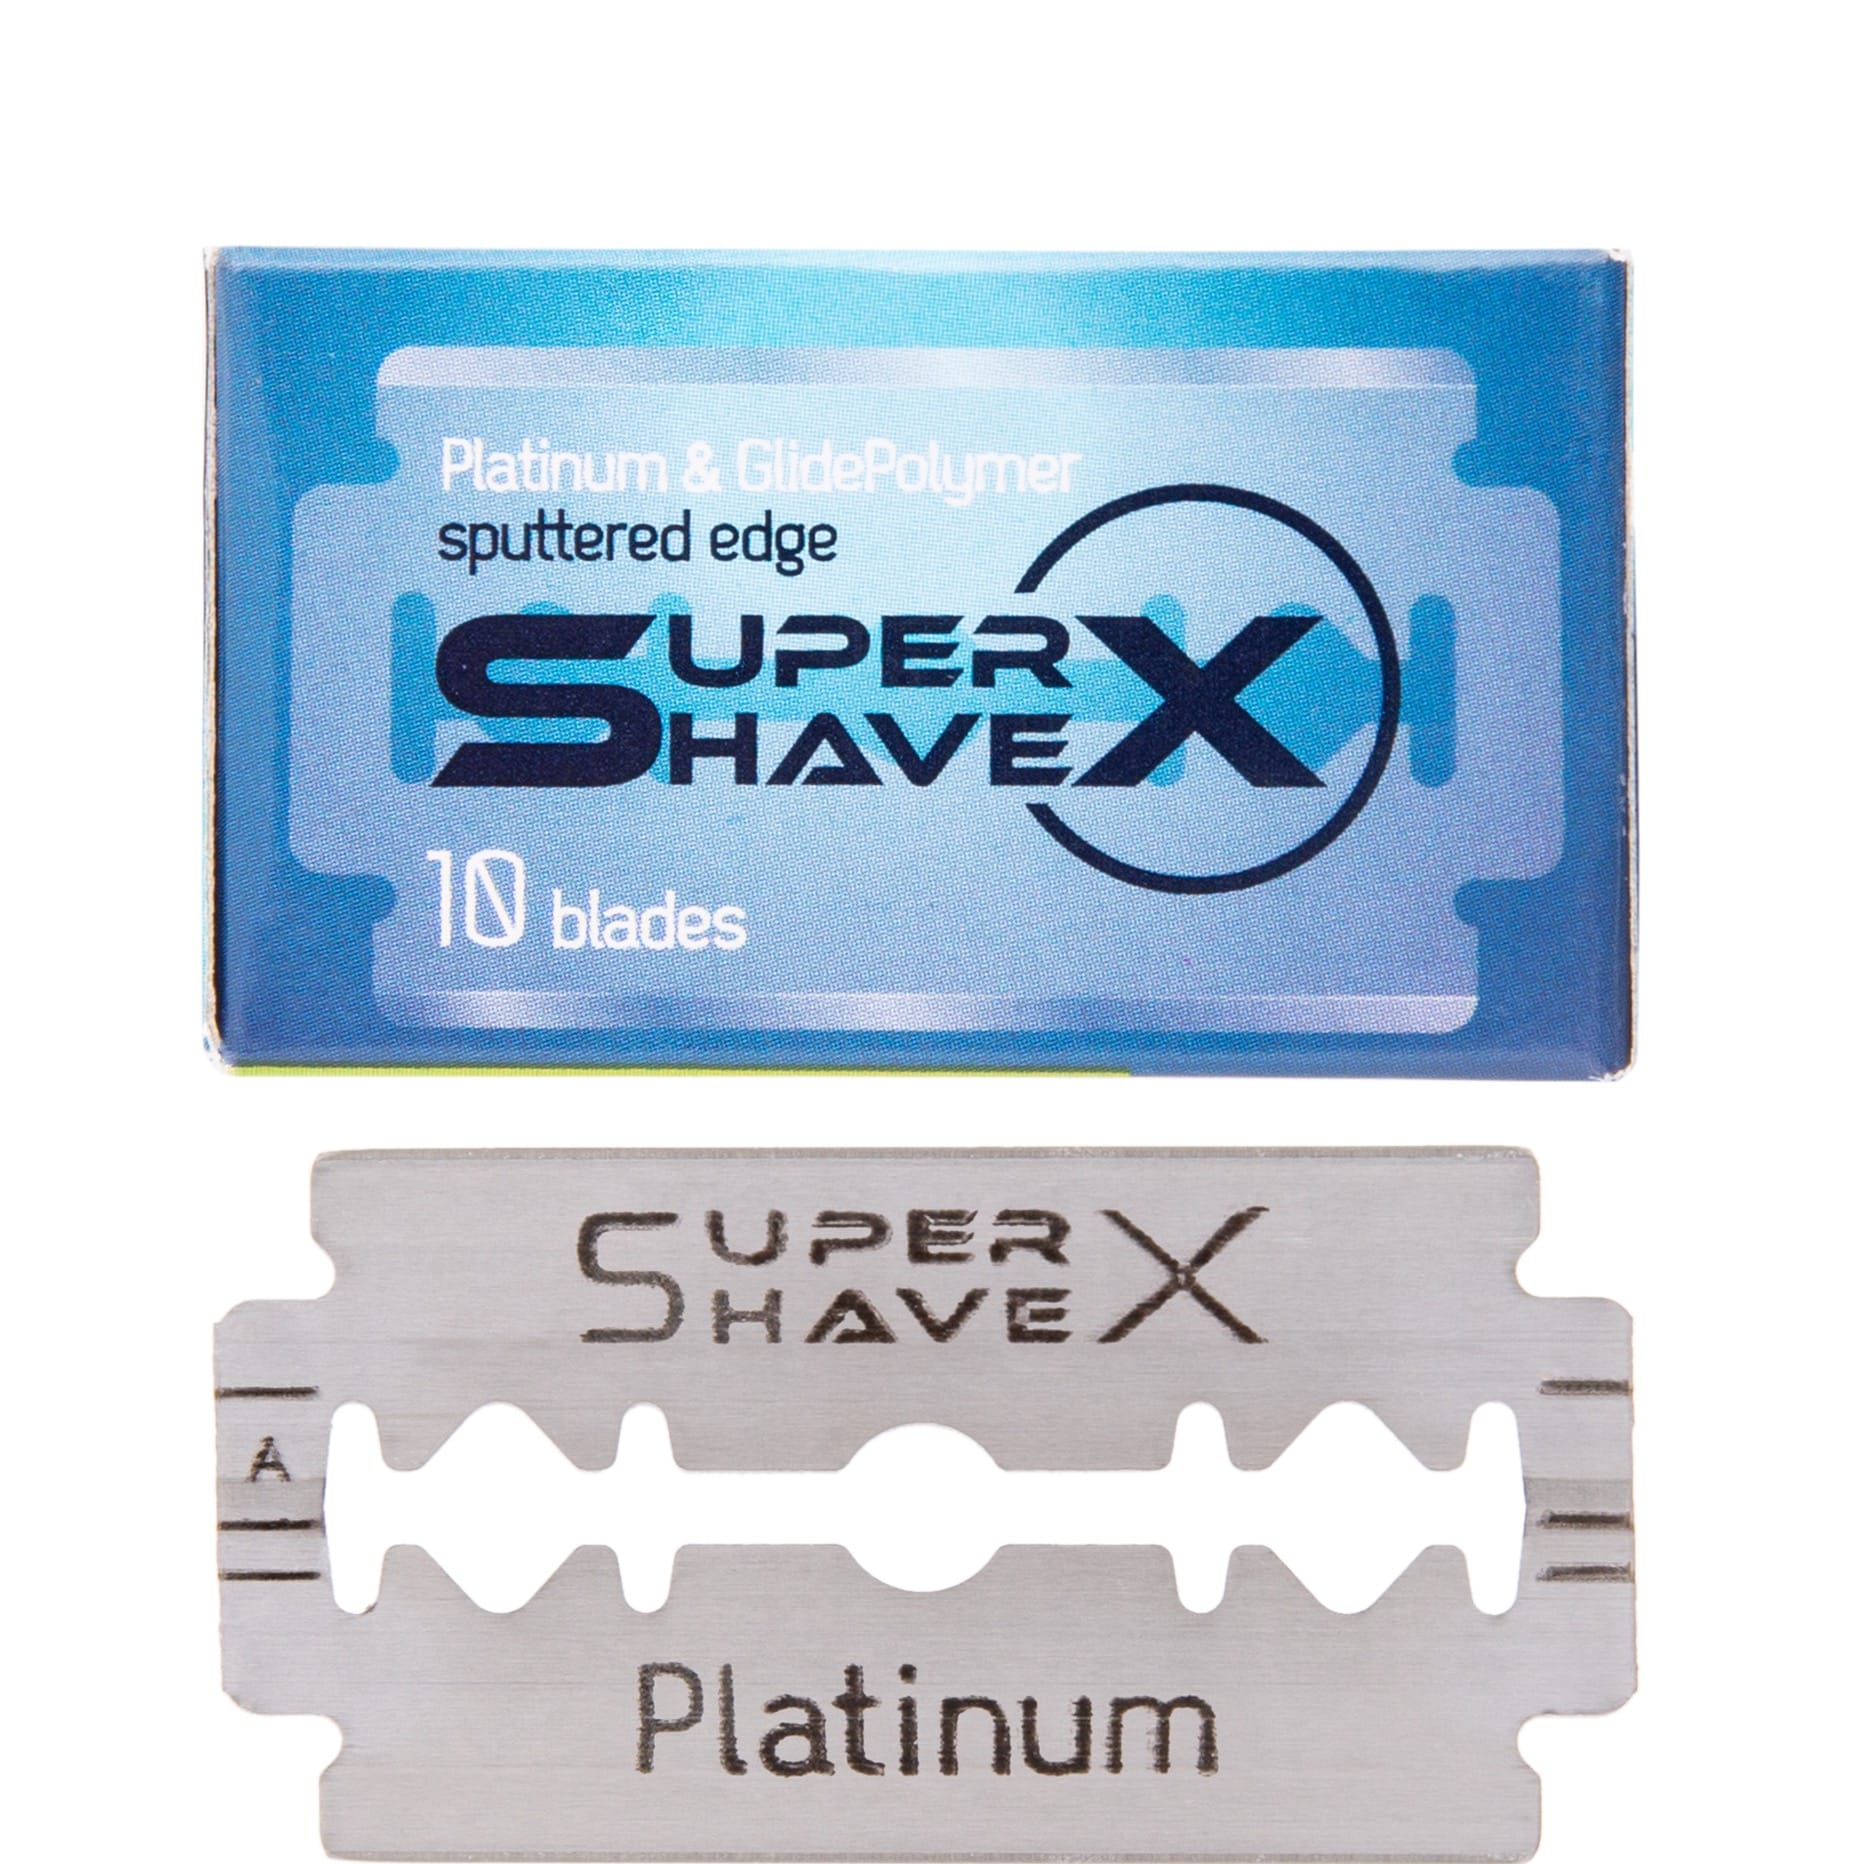 Super Shave X Double Edge Blade 20x - 1.2 - BOX-DEB-SUPERSHAVE